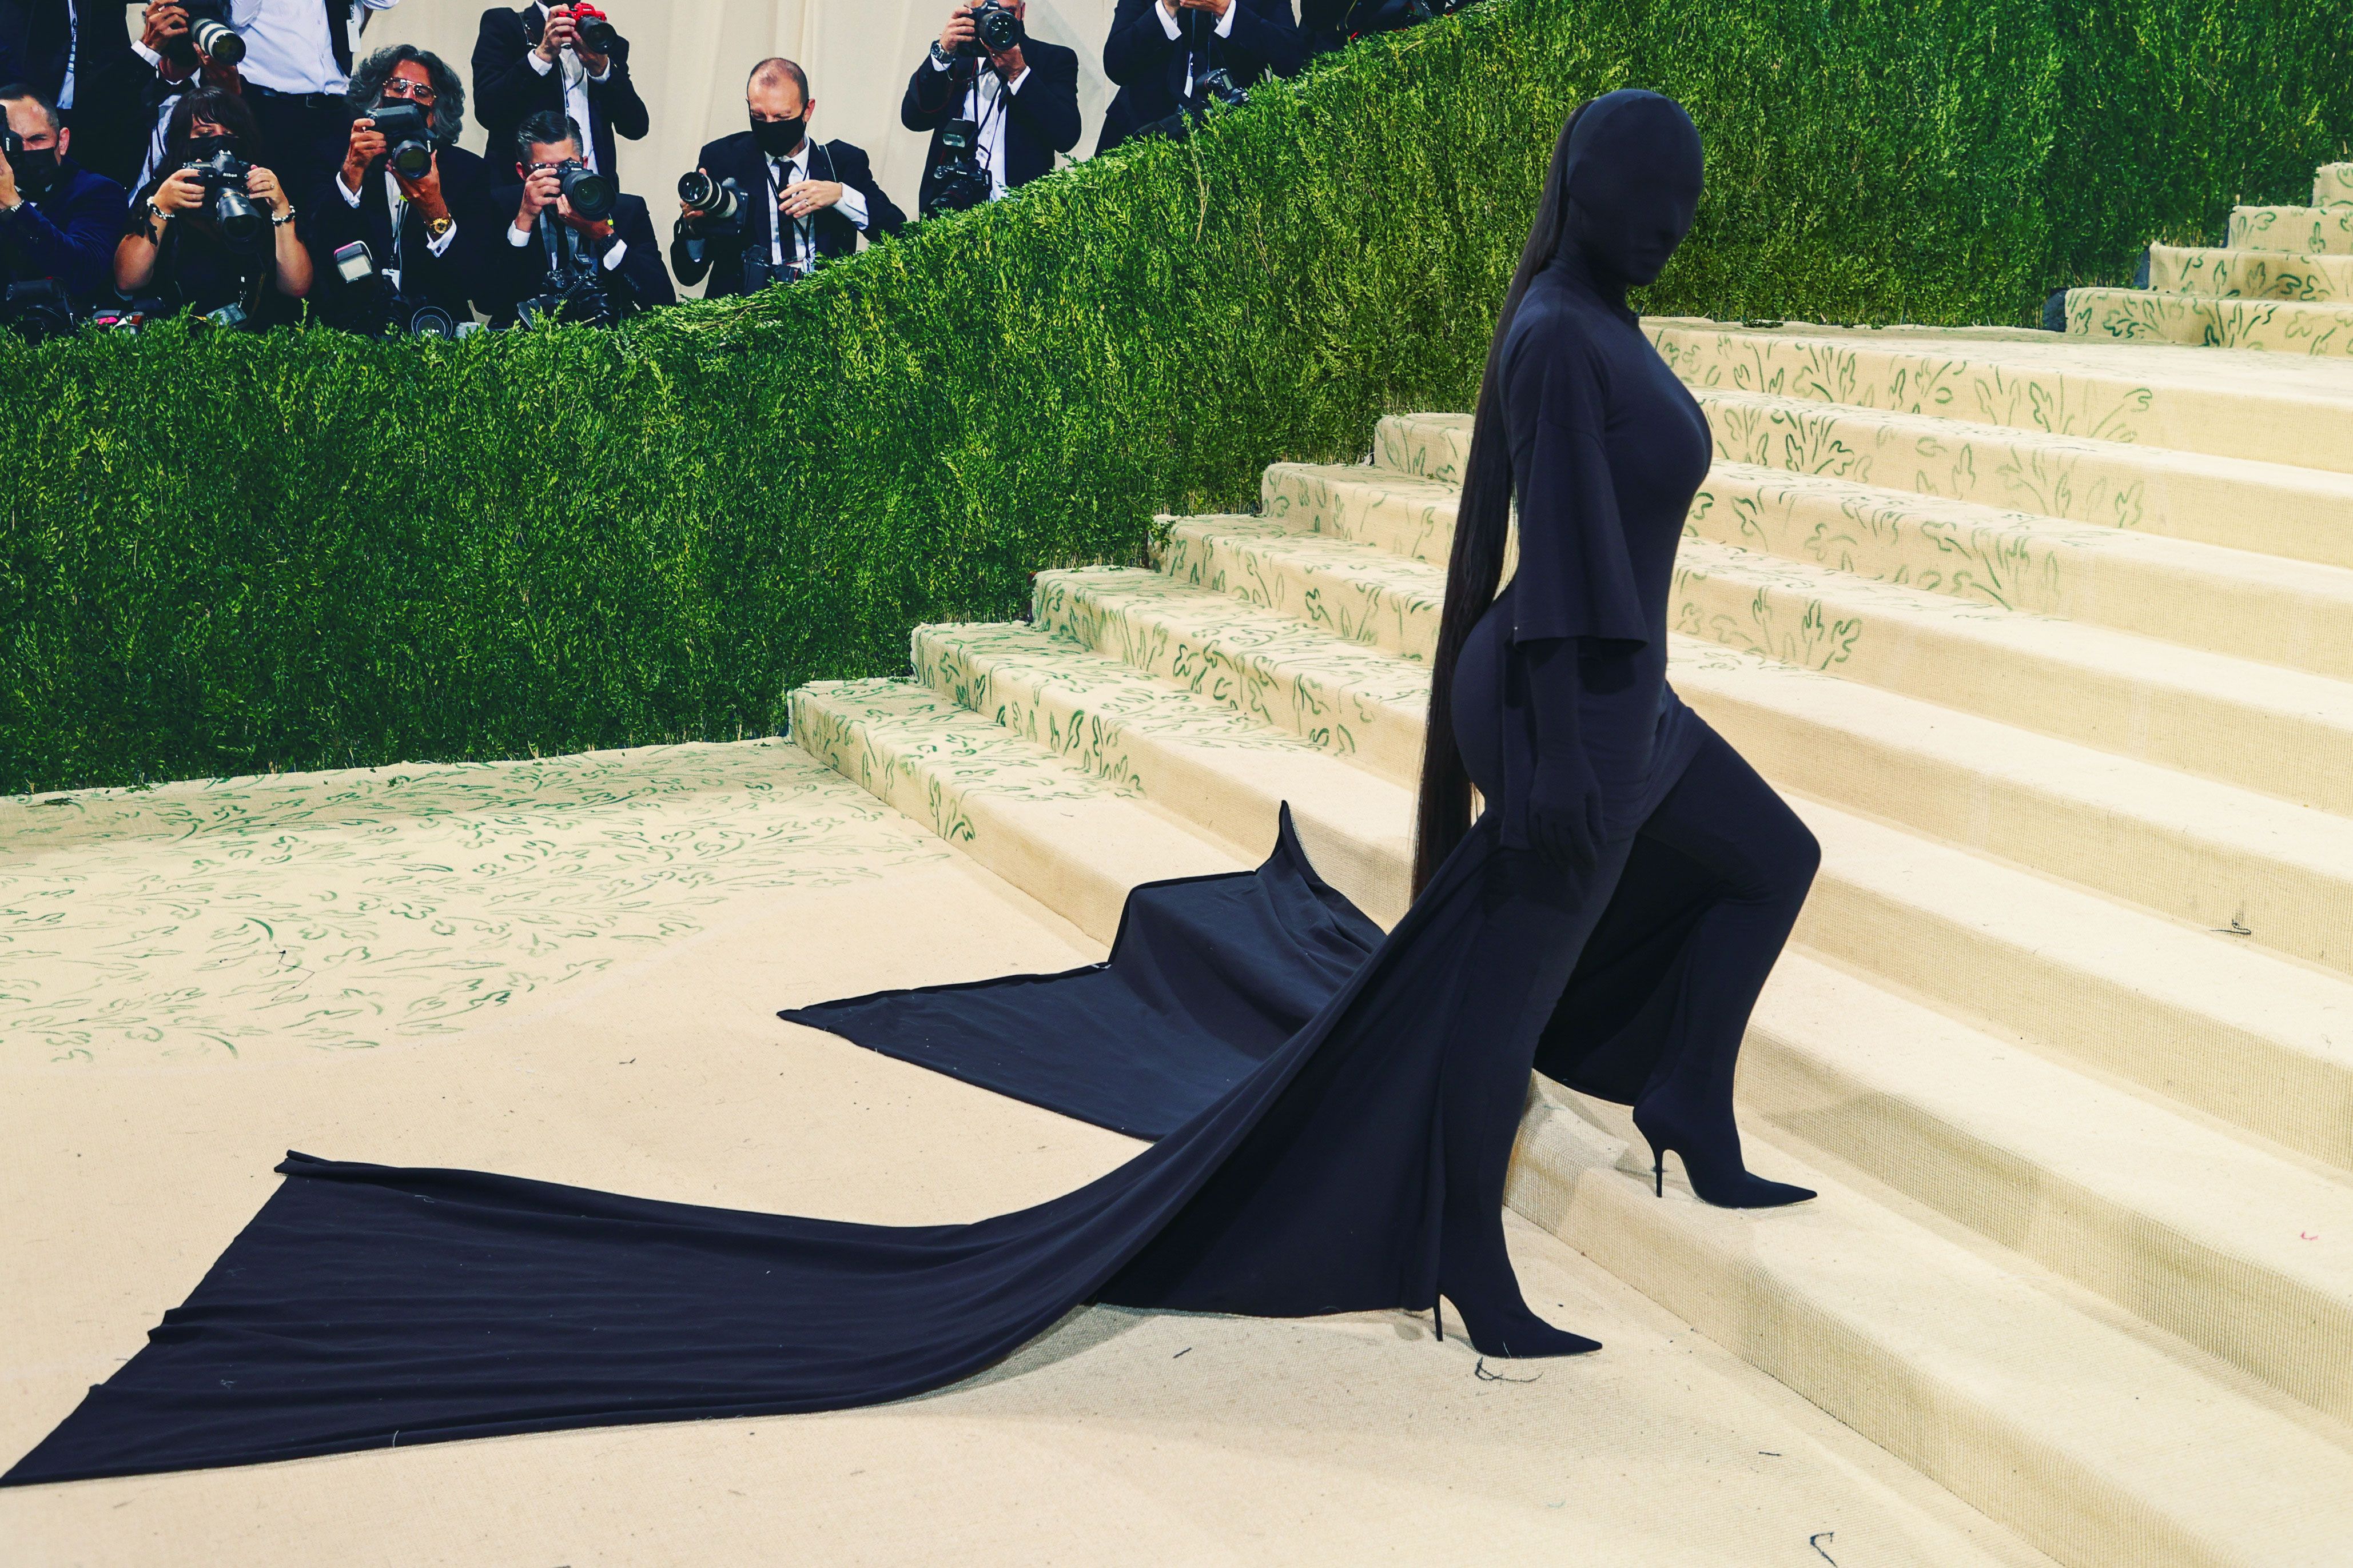 Our favorite Kim Kardashian Louis Vuitton looks